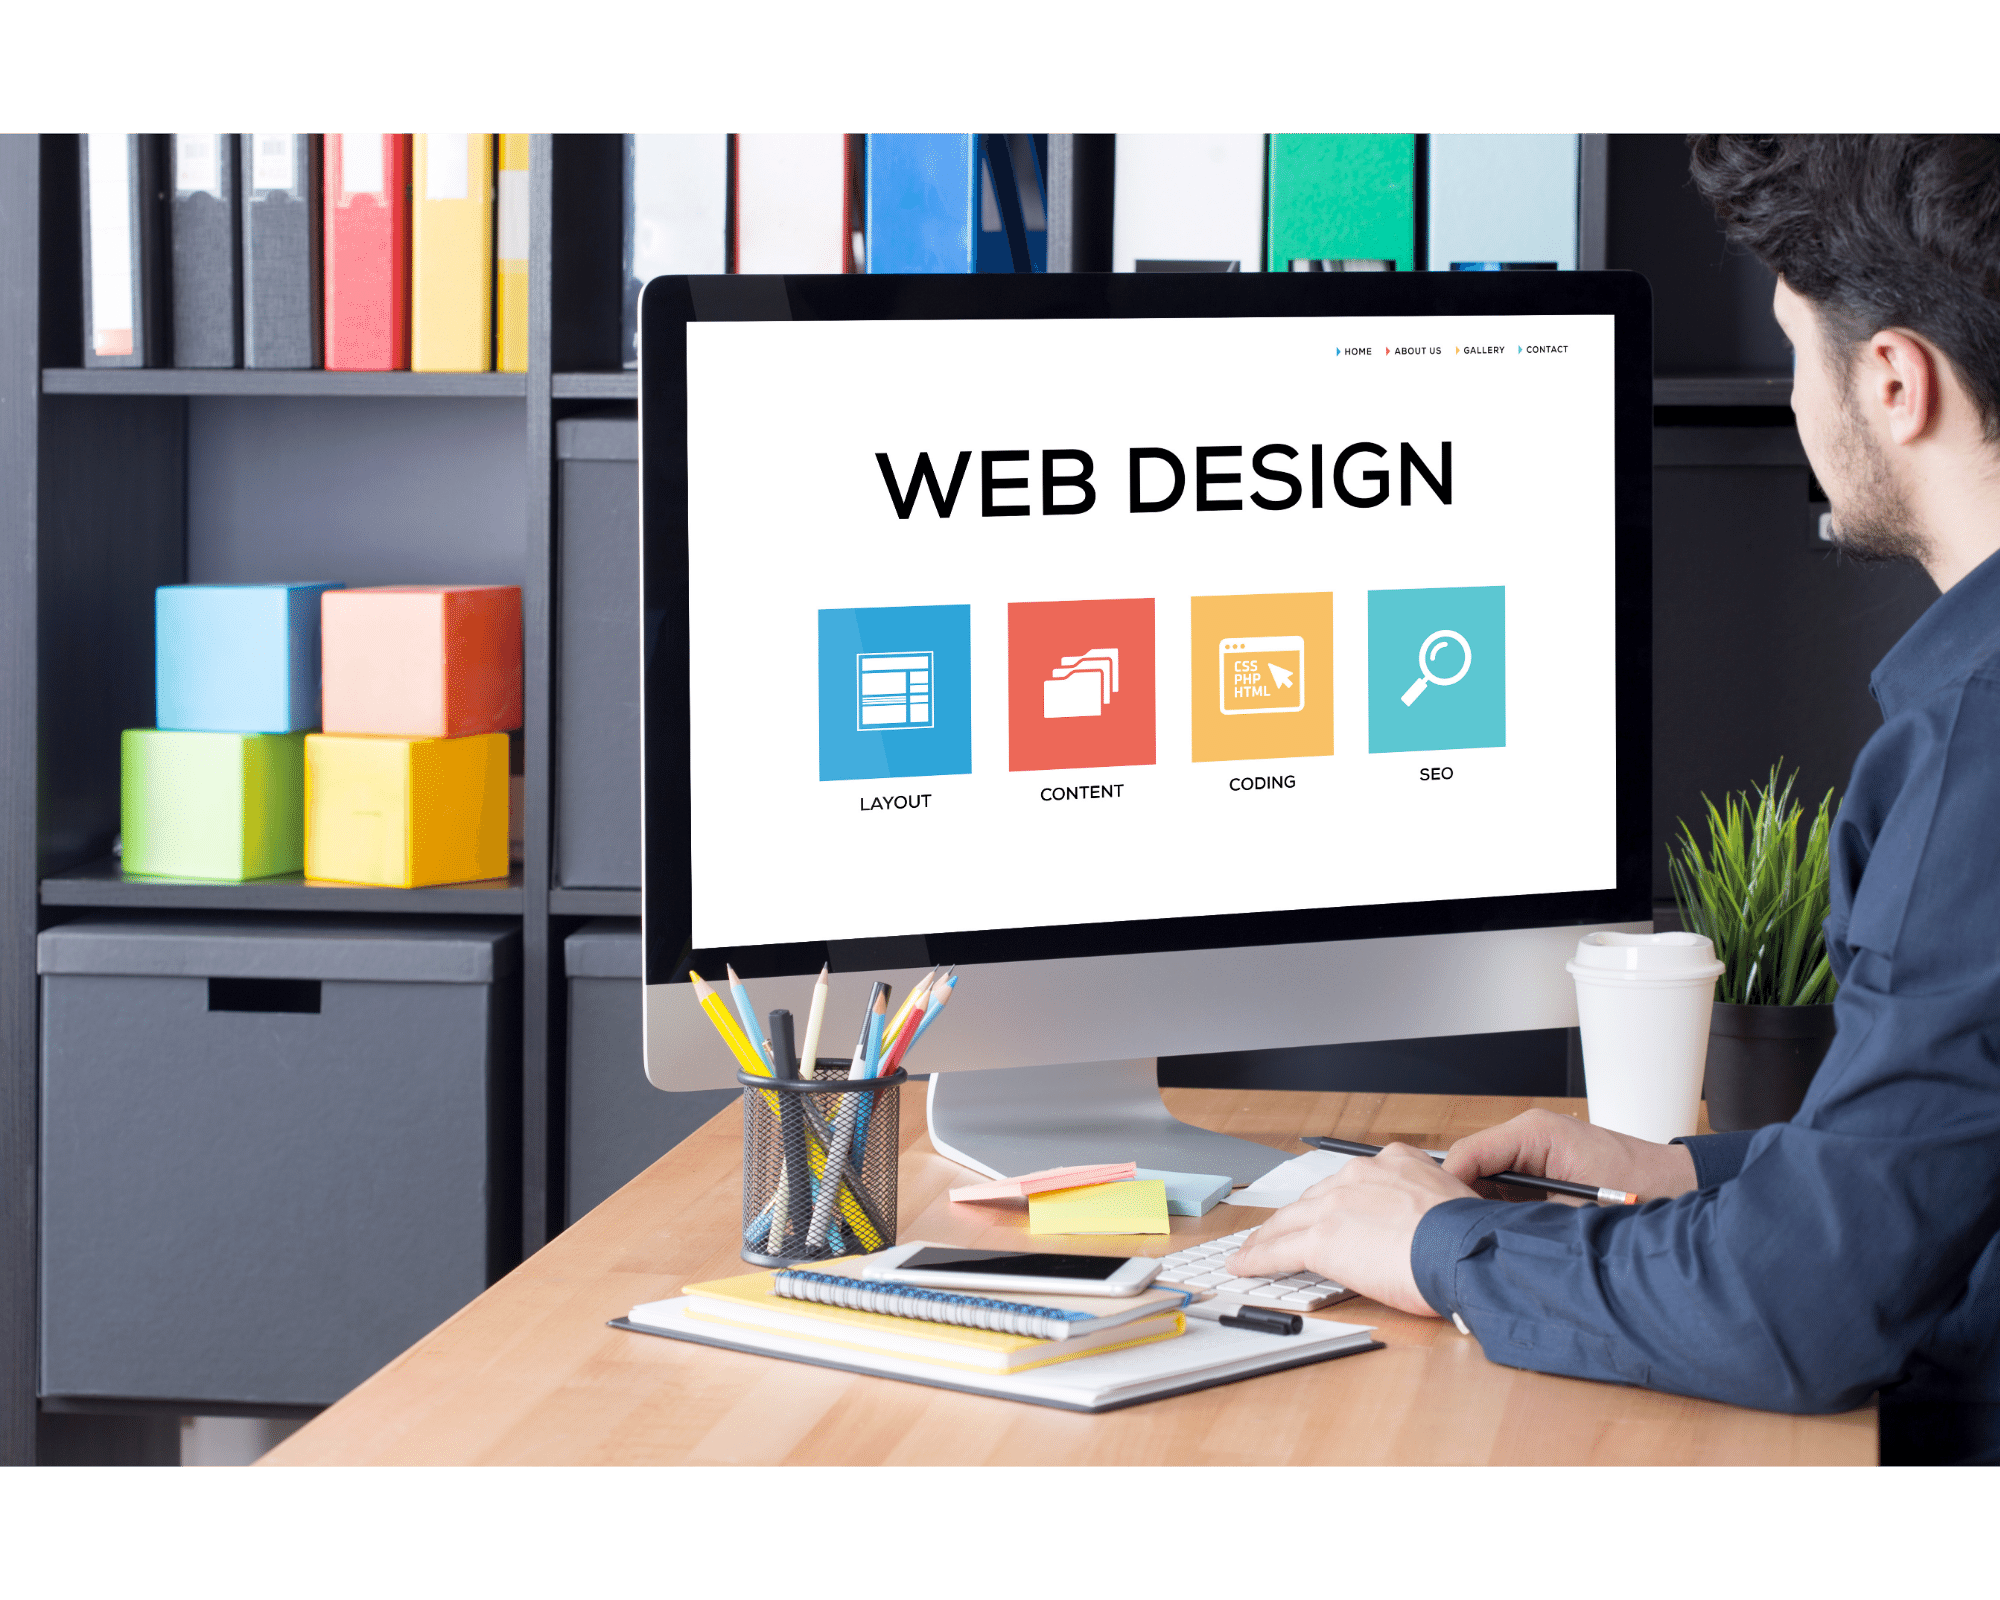 Hiweb - Web Design